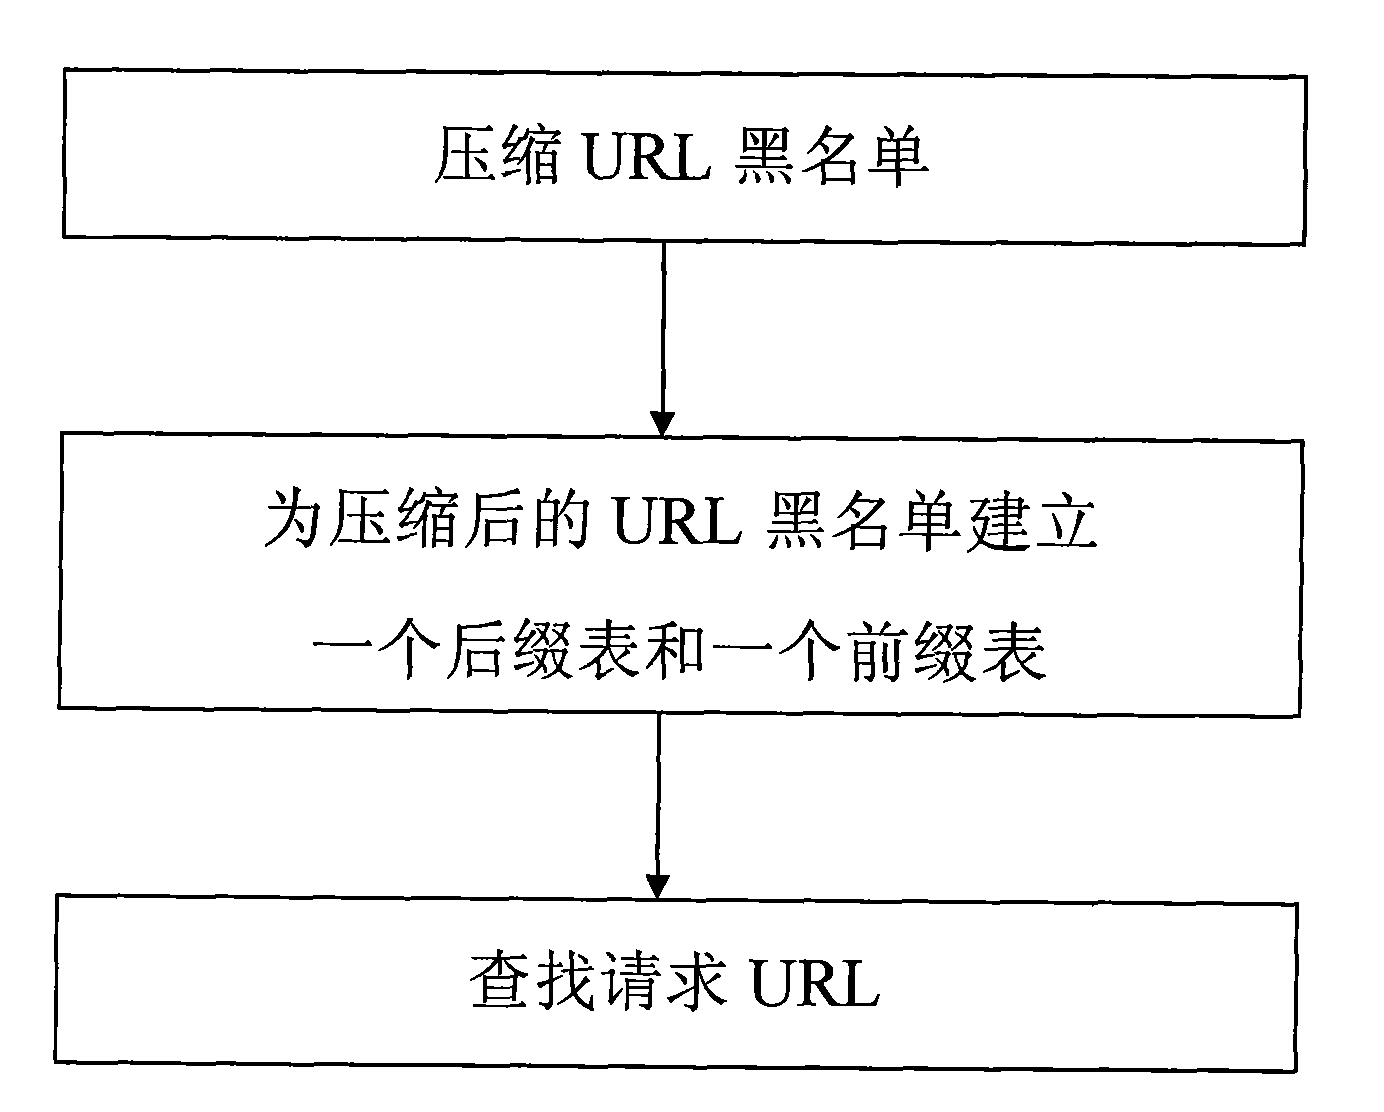 URL lookup method for URL filtering system